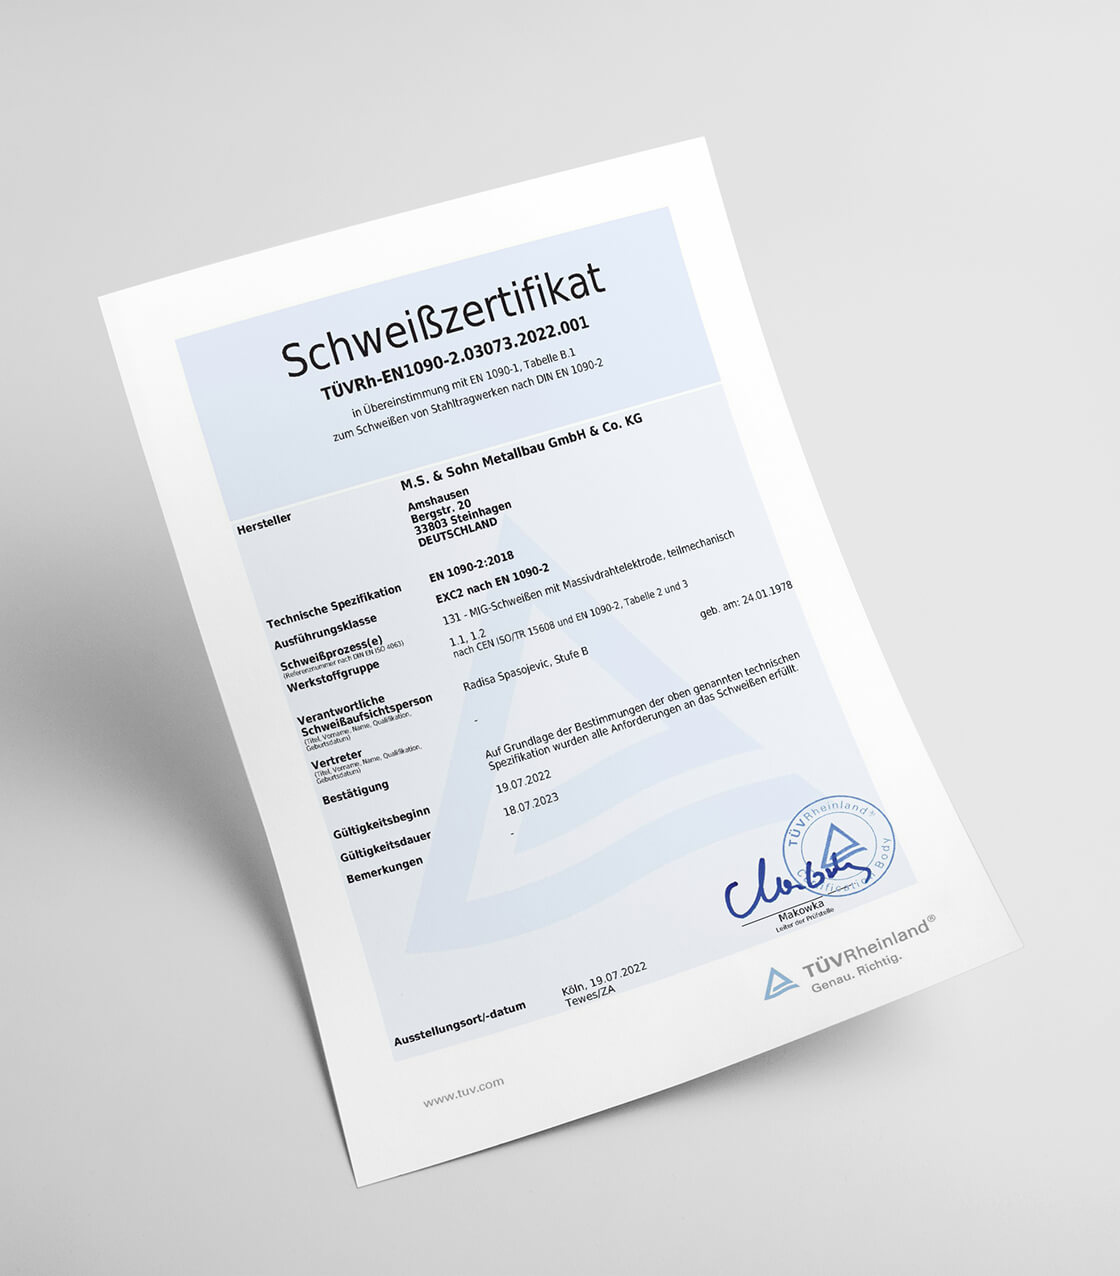 Zertifikat-9001 - M. S. &amp; Sohn Metallbau